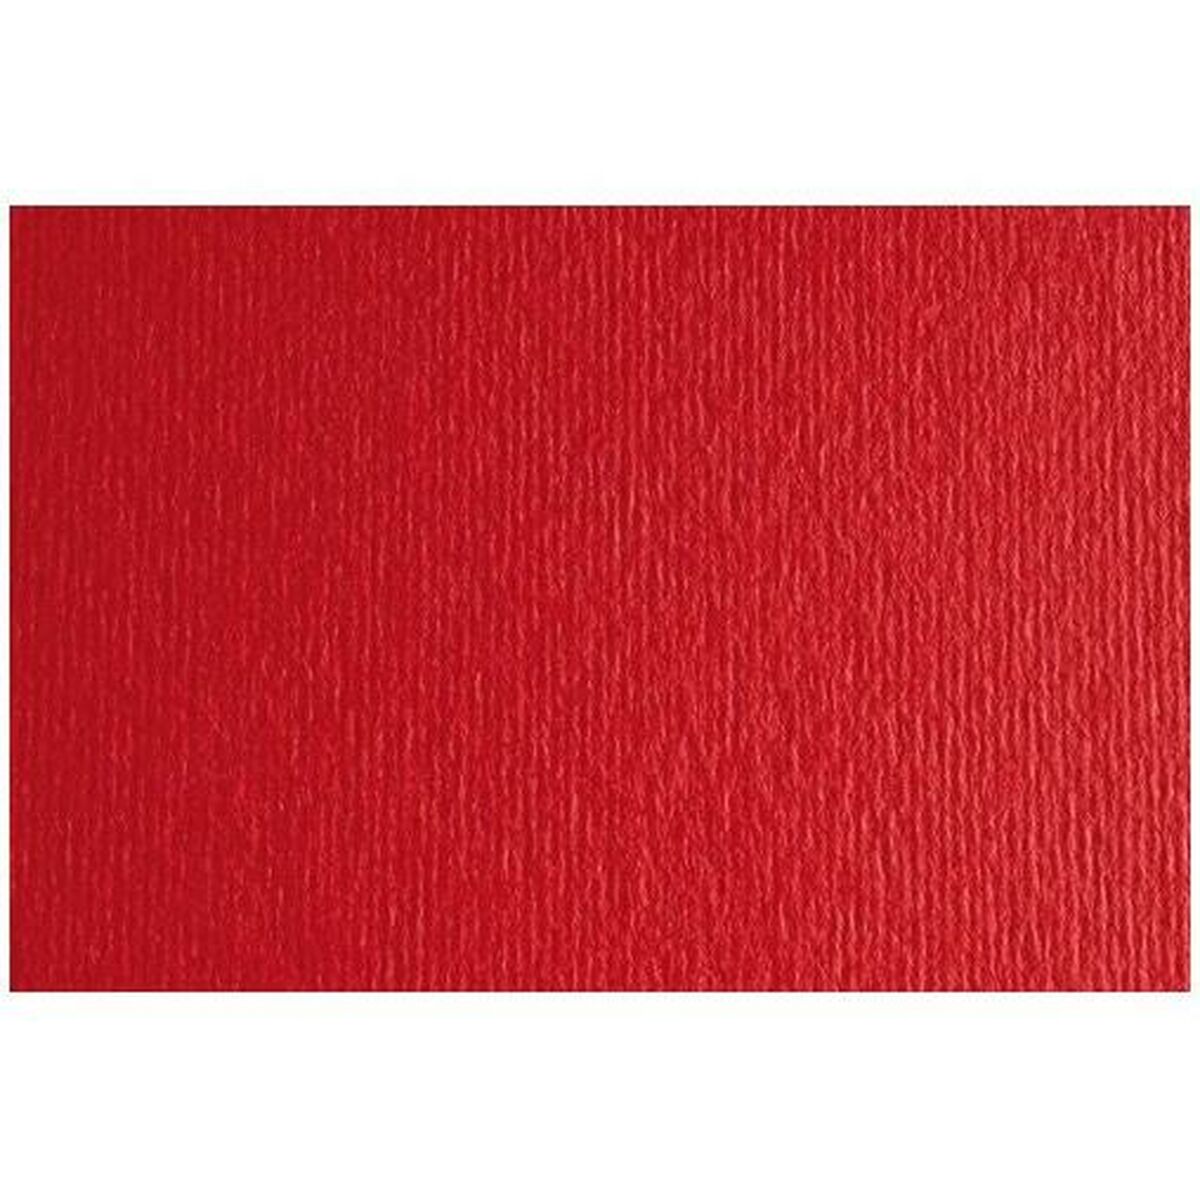 Card Sadipal LR 200 Texturised Red 50 x 70 cm (20 Units)